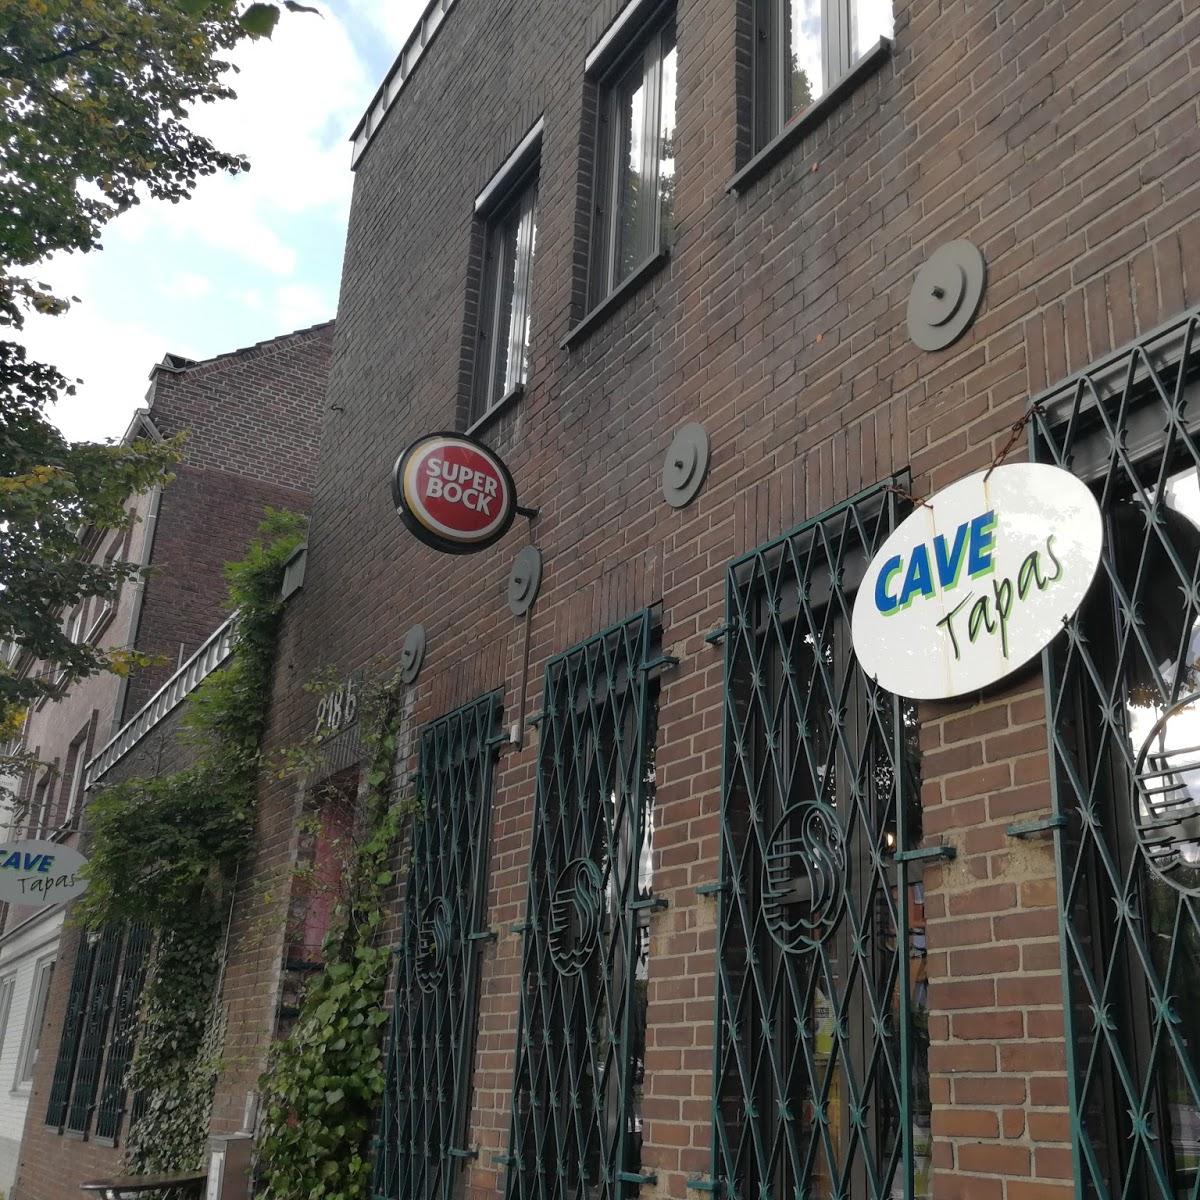 Restaurant "Cave Tapas" in Düsseldorf